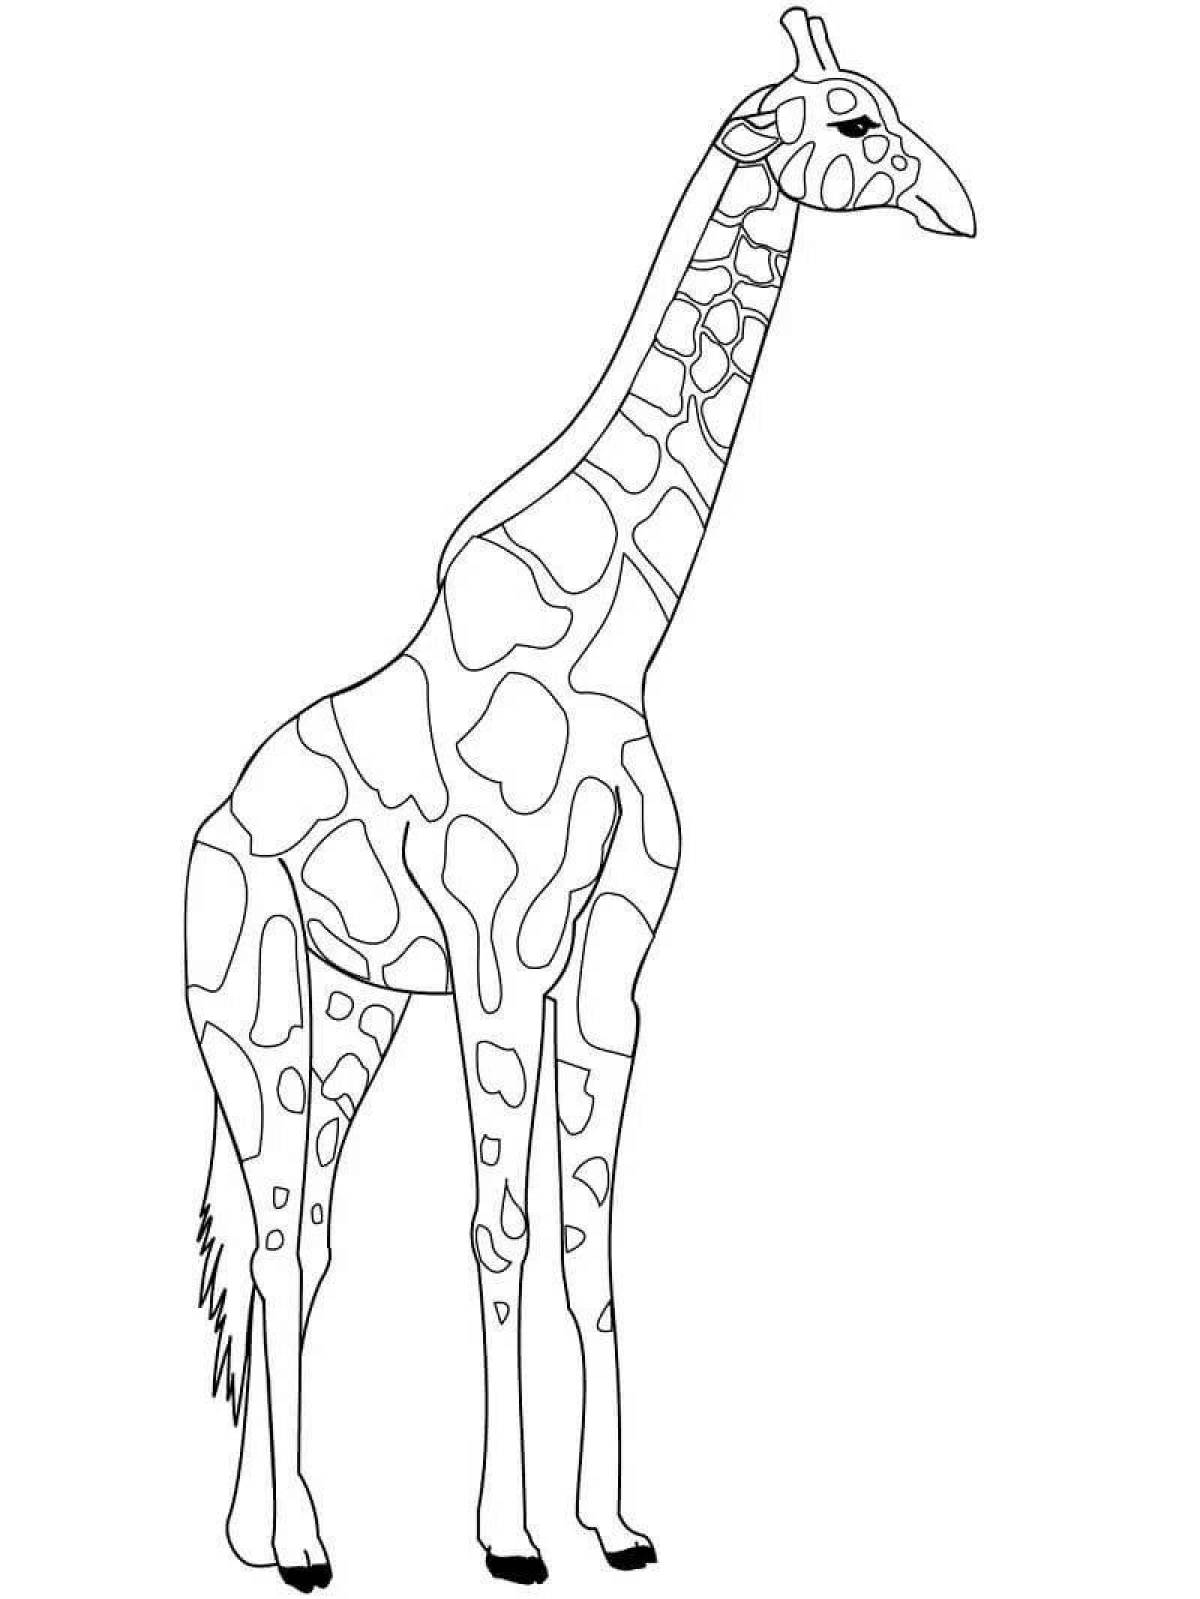 Shiny giraffe adopt mi ​​coloring page